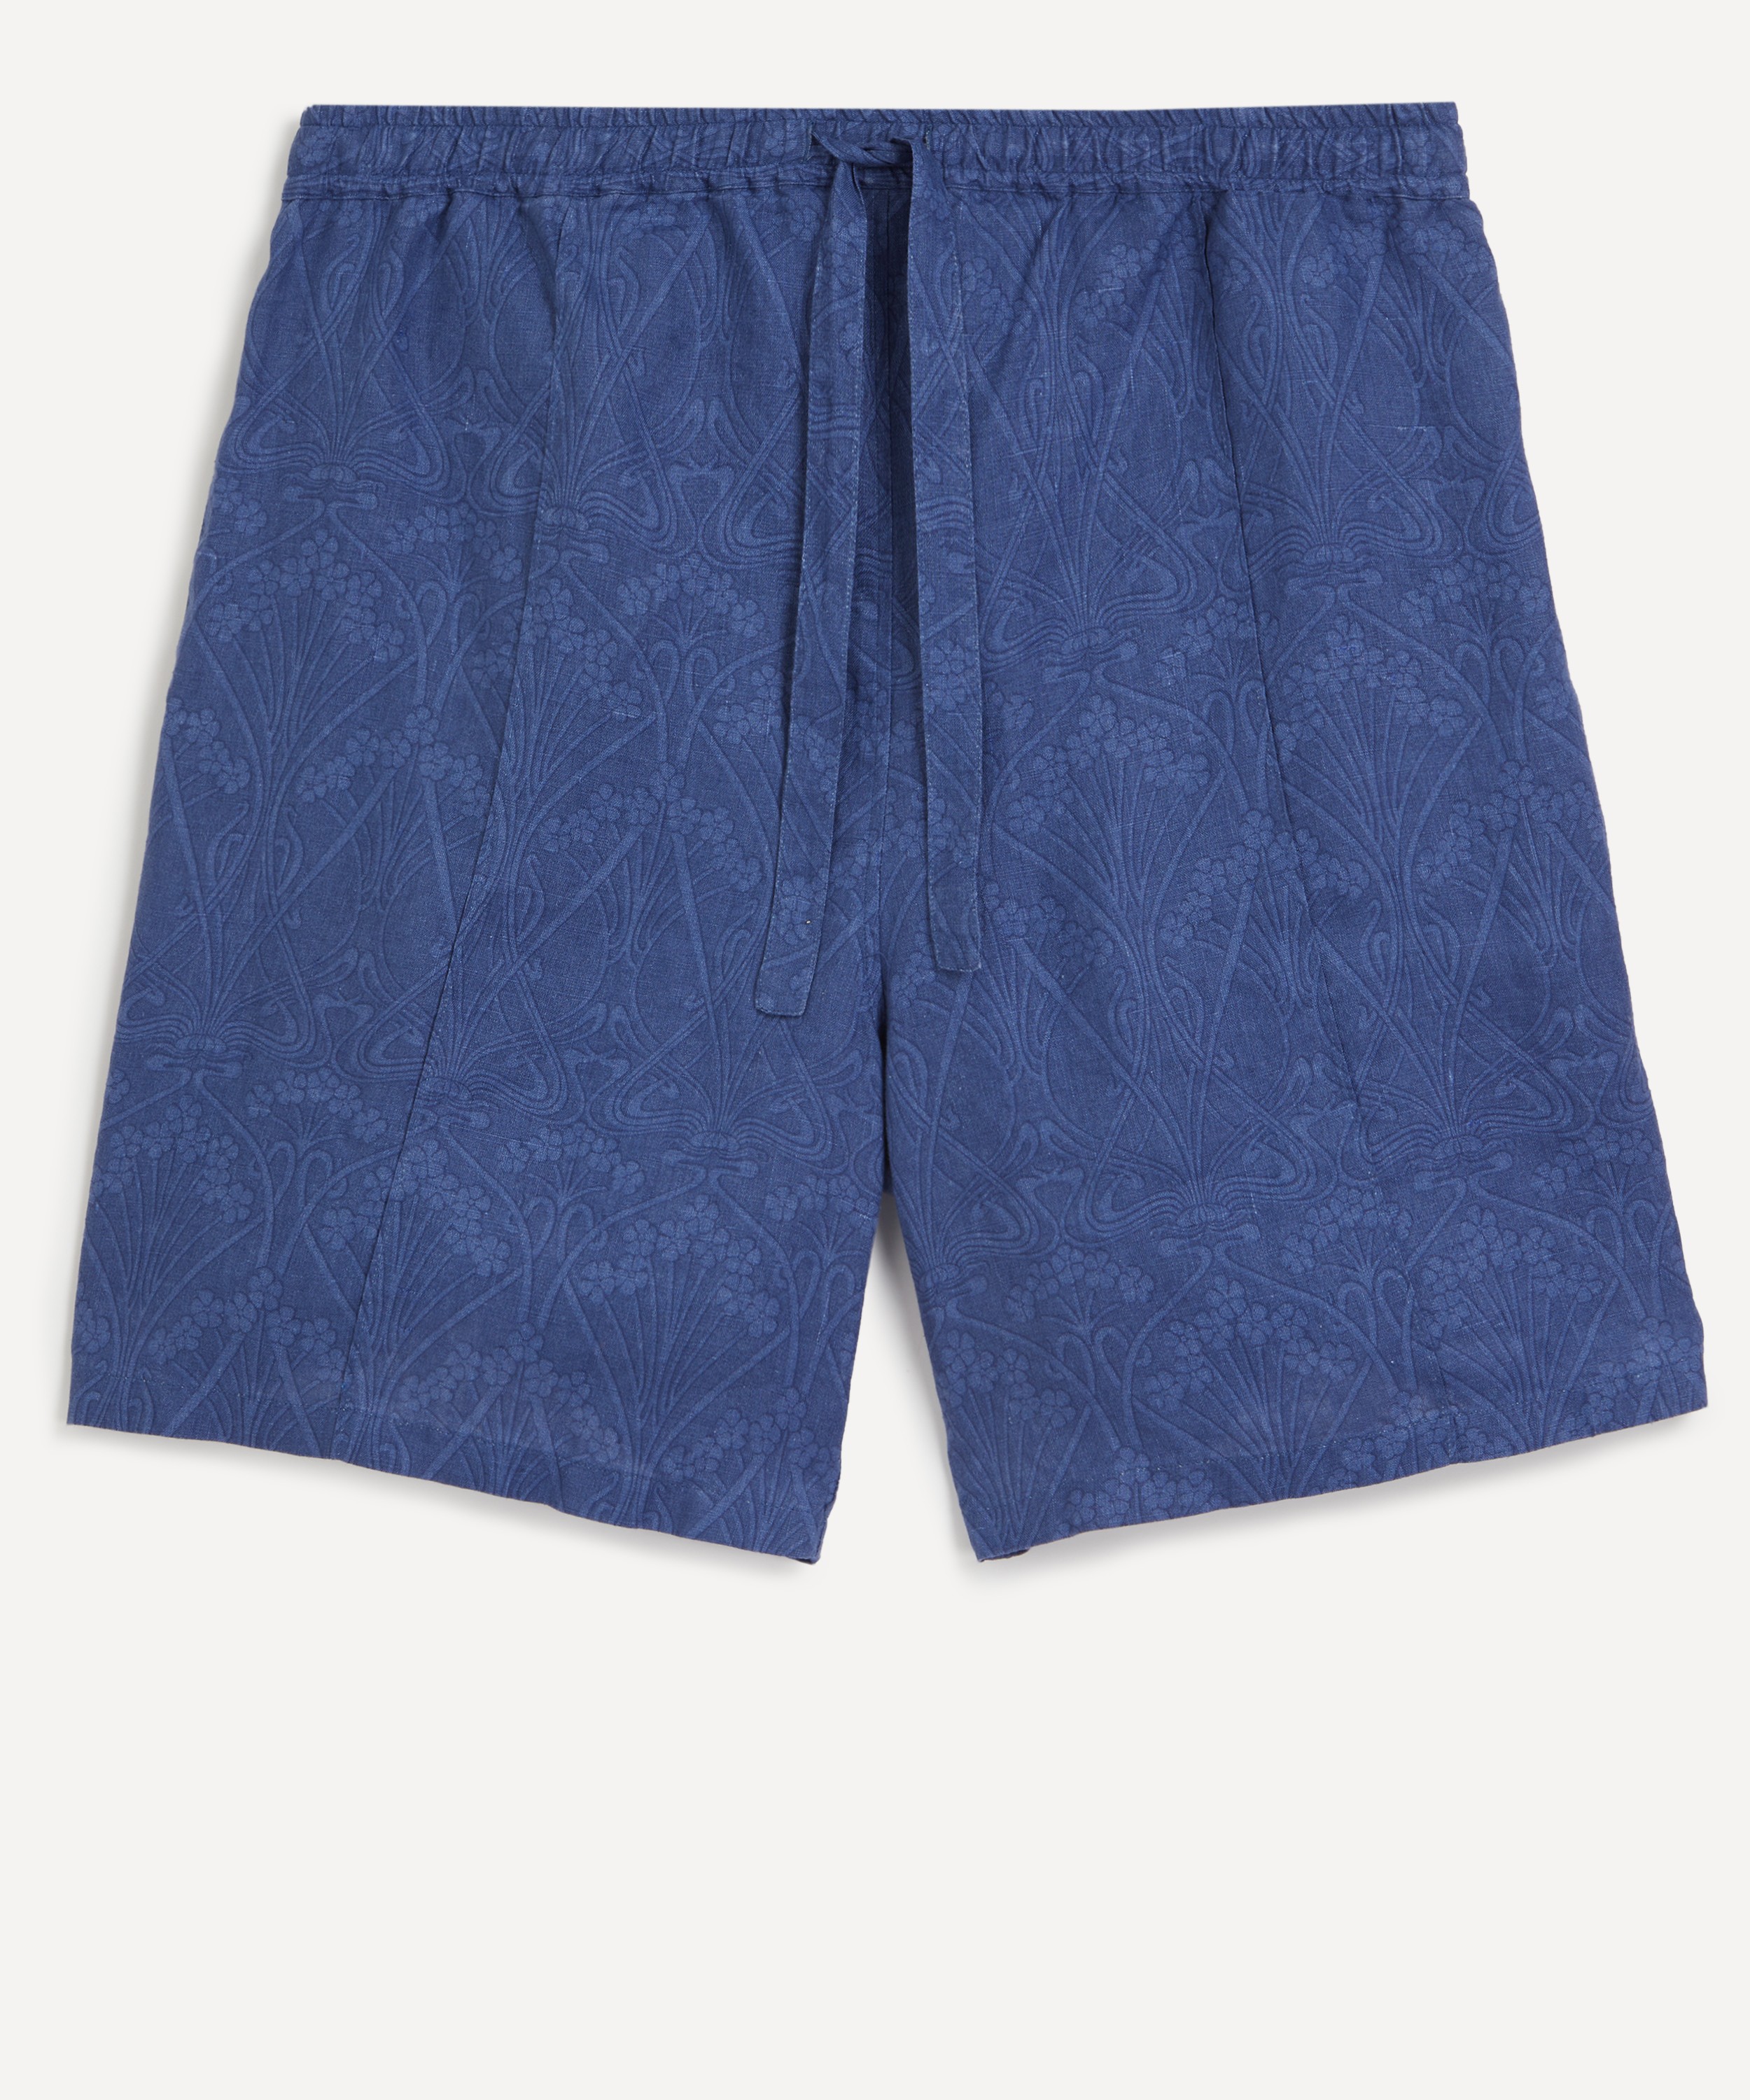 Men's Designer Shorts, Chino, Lounge Shorts